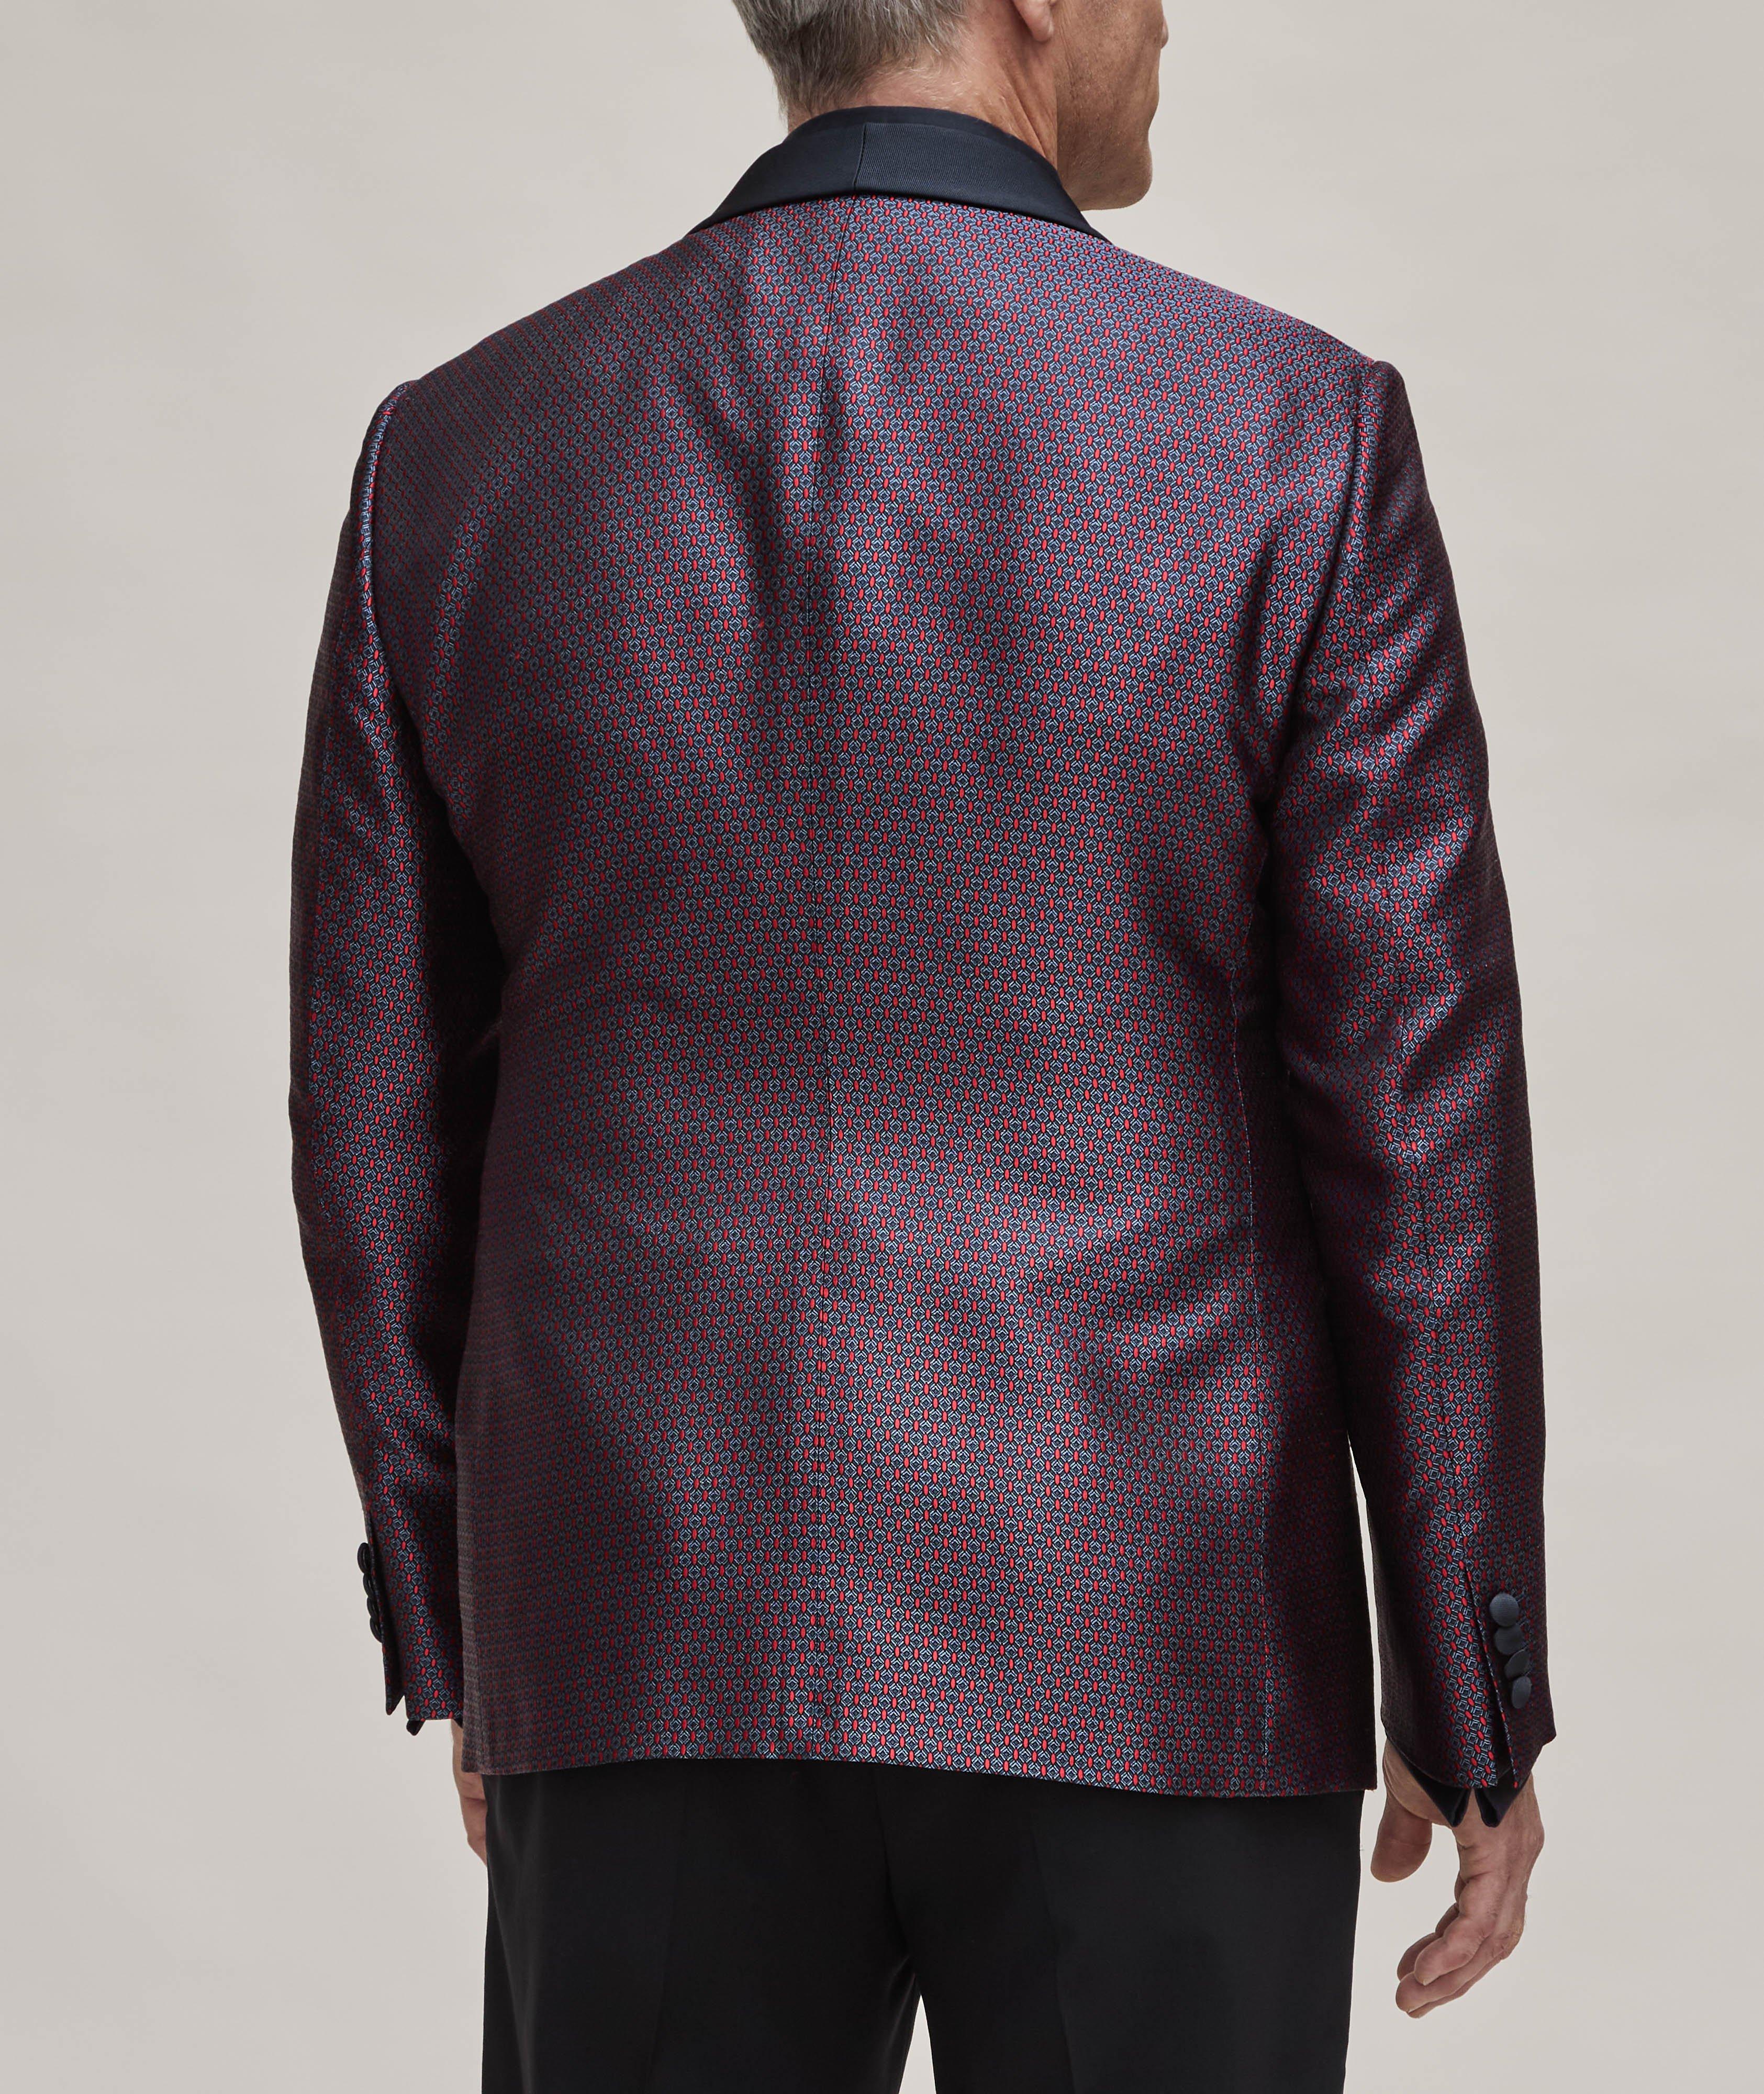 Giorgio Collection Geometric Jacquard Silk Sport Jacket image 2